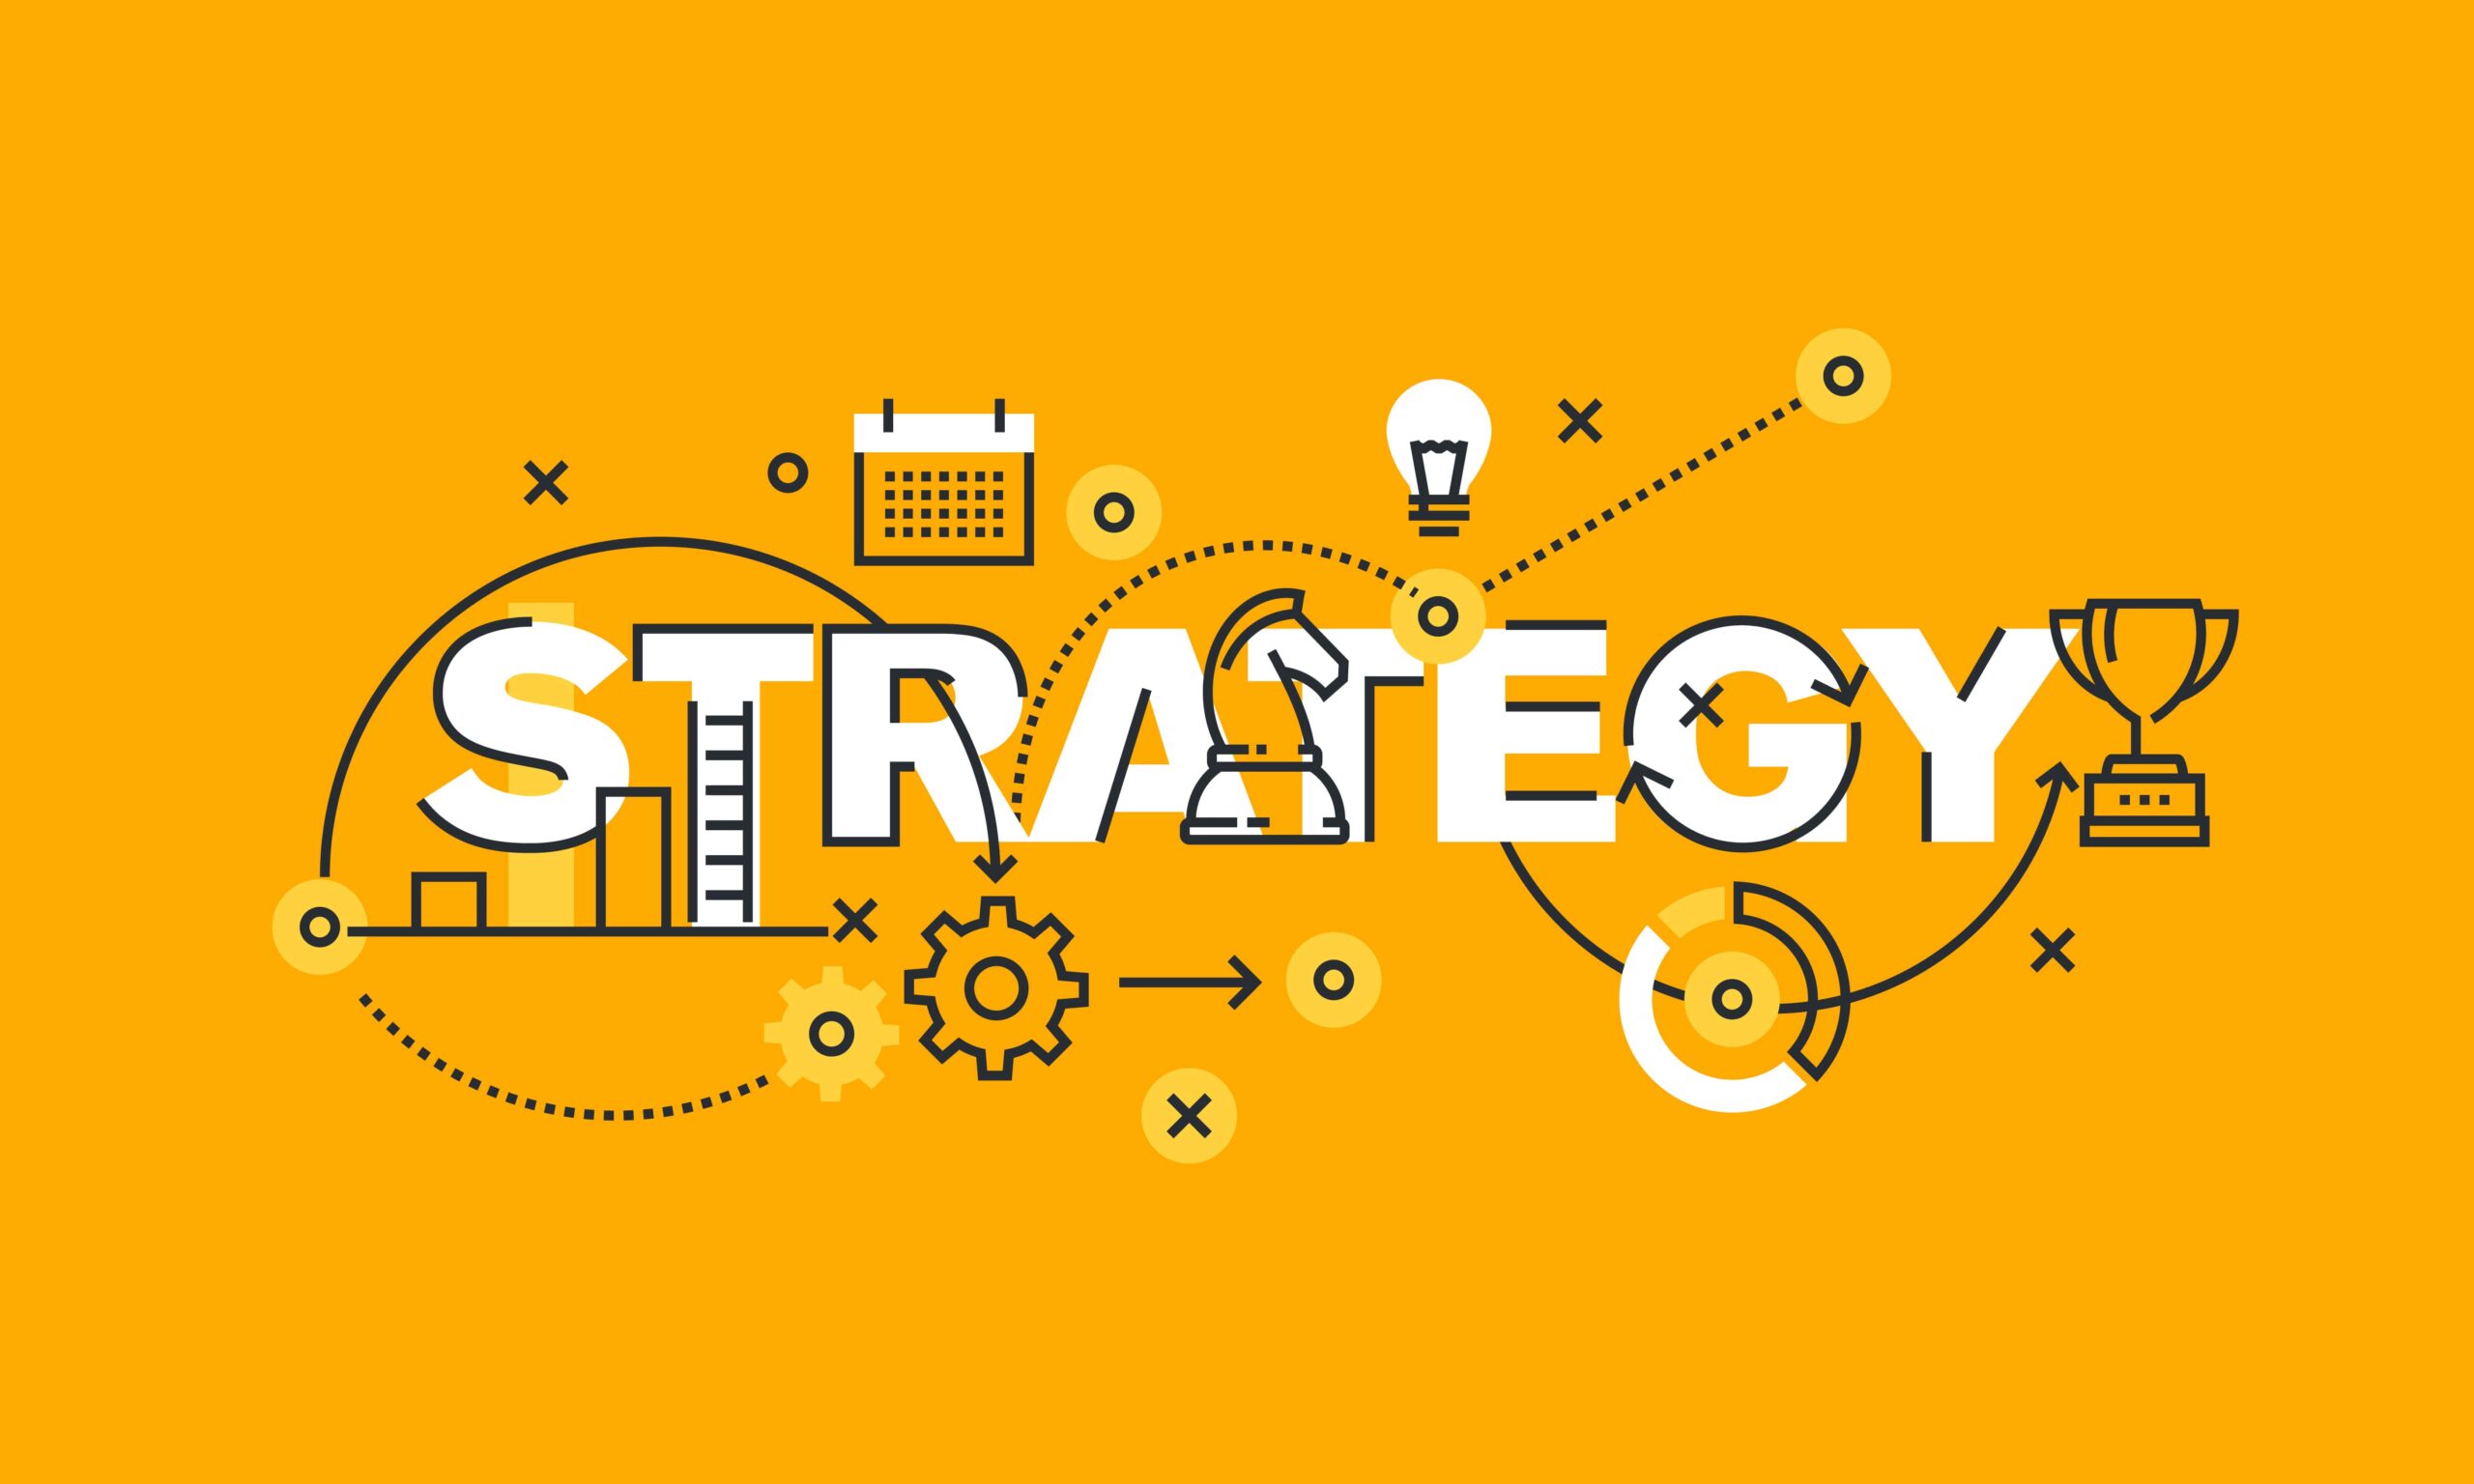 digital marketing strategy